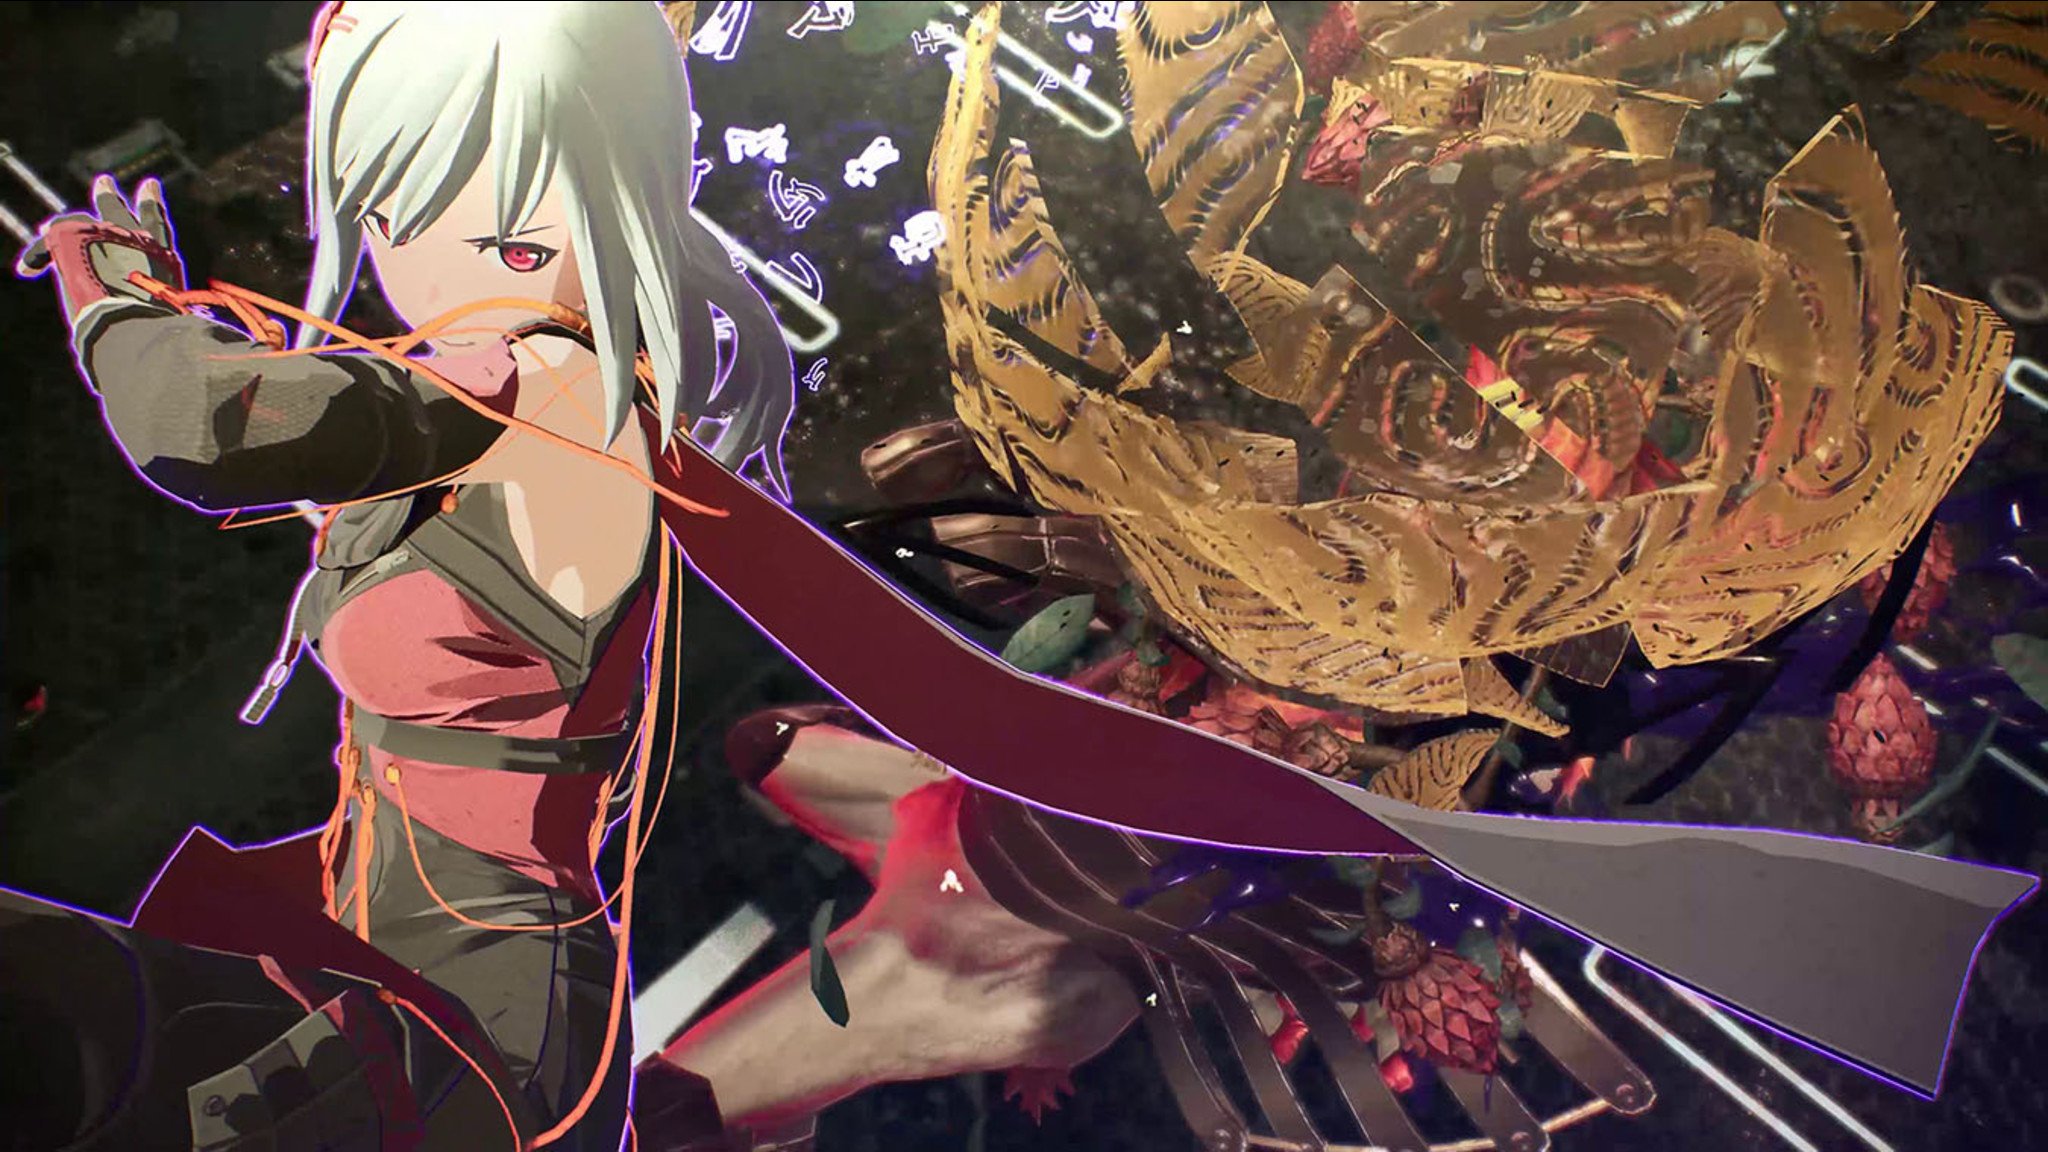 Two new gameplay trailers of Scarlet Nexus (new JRPG by Bandai